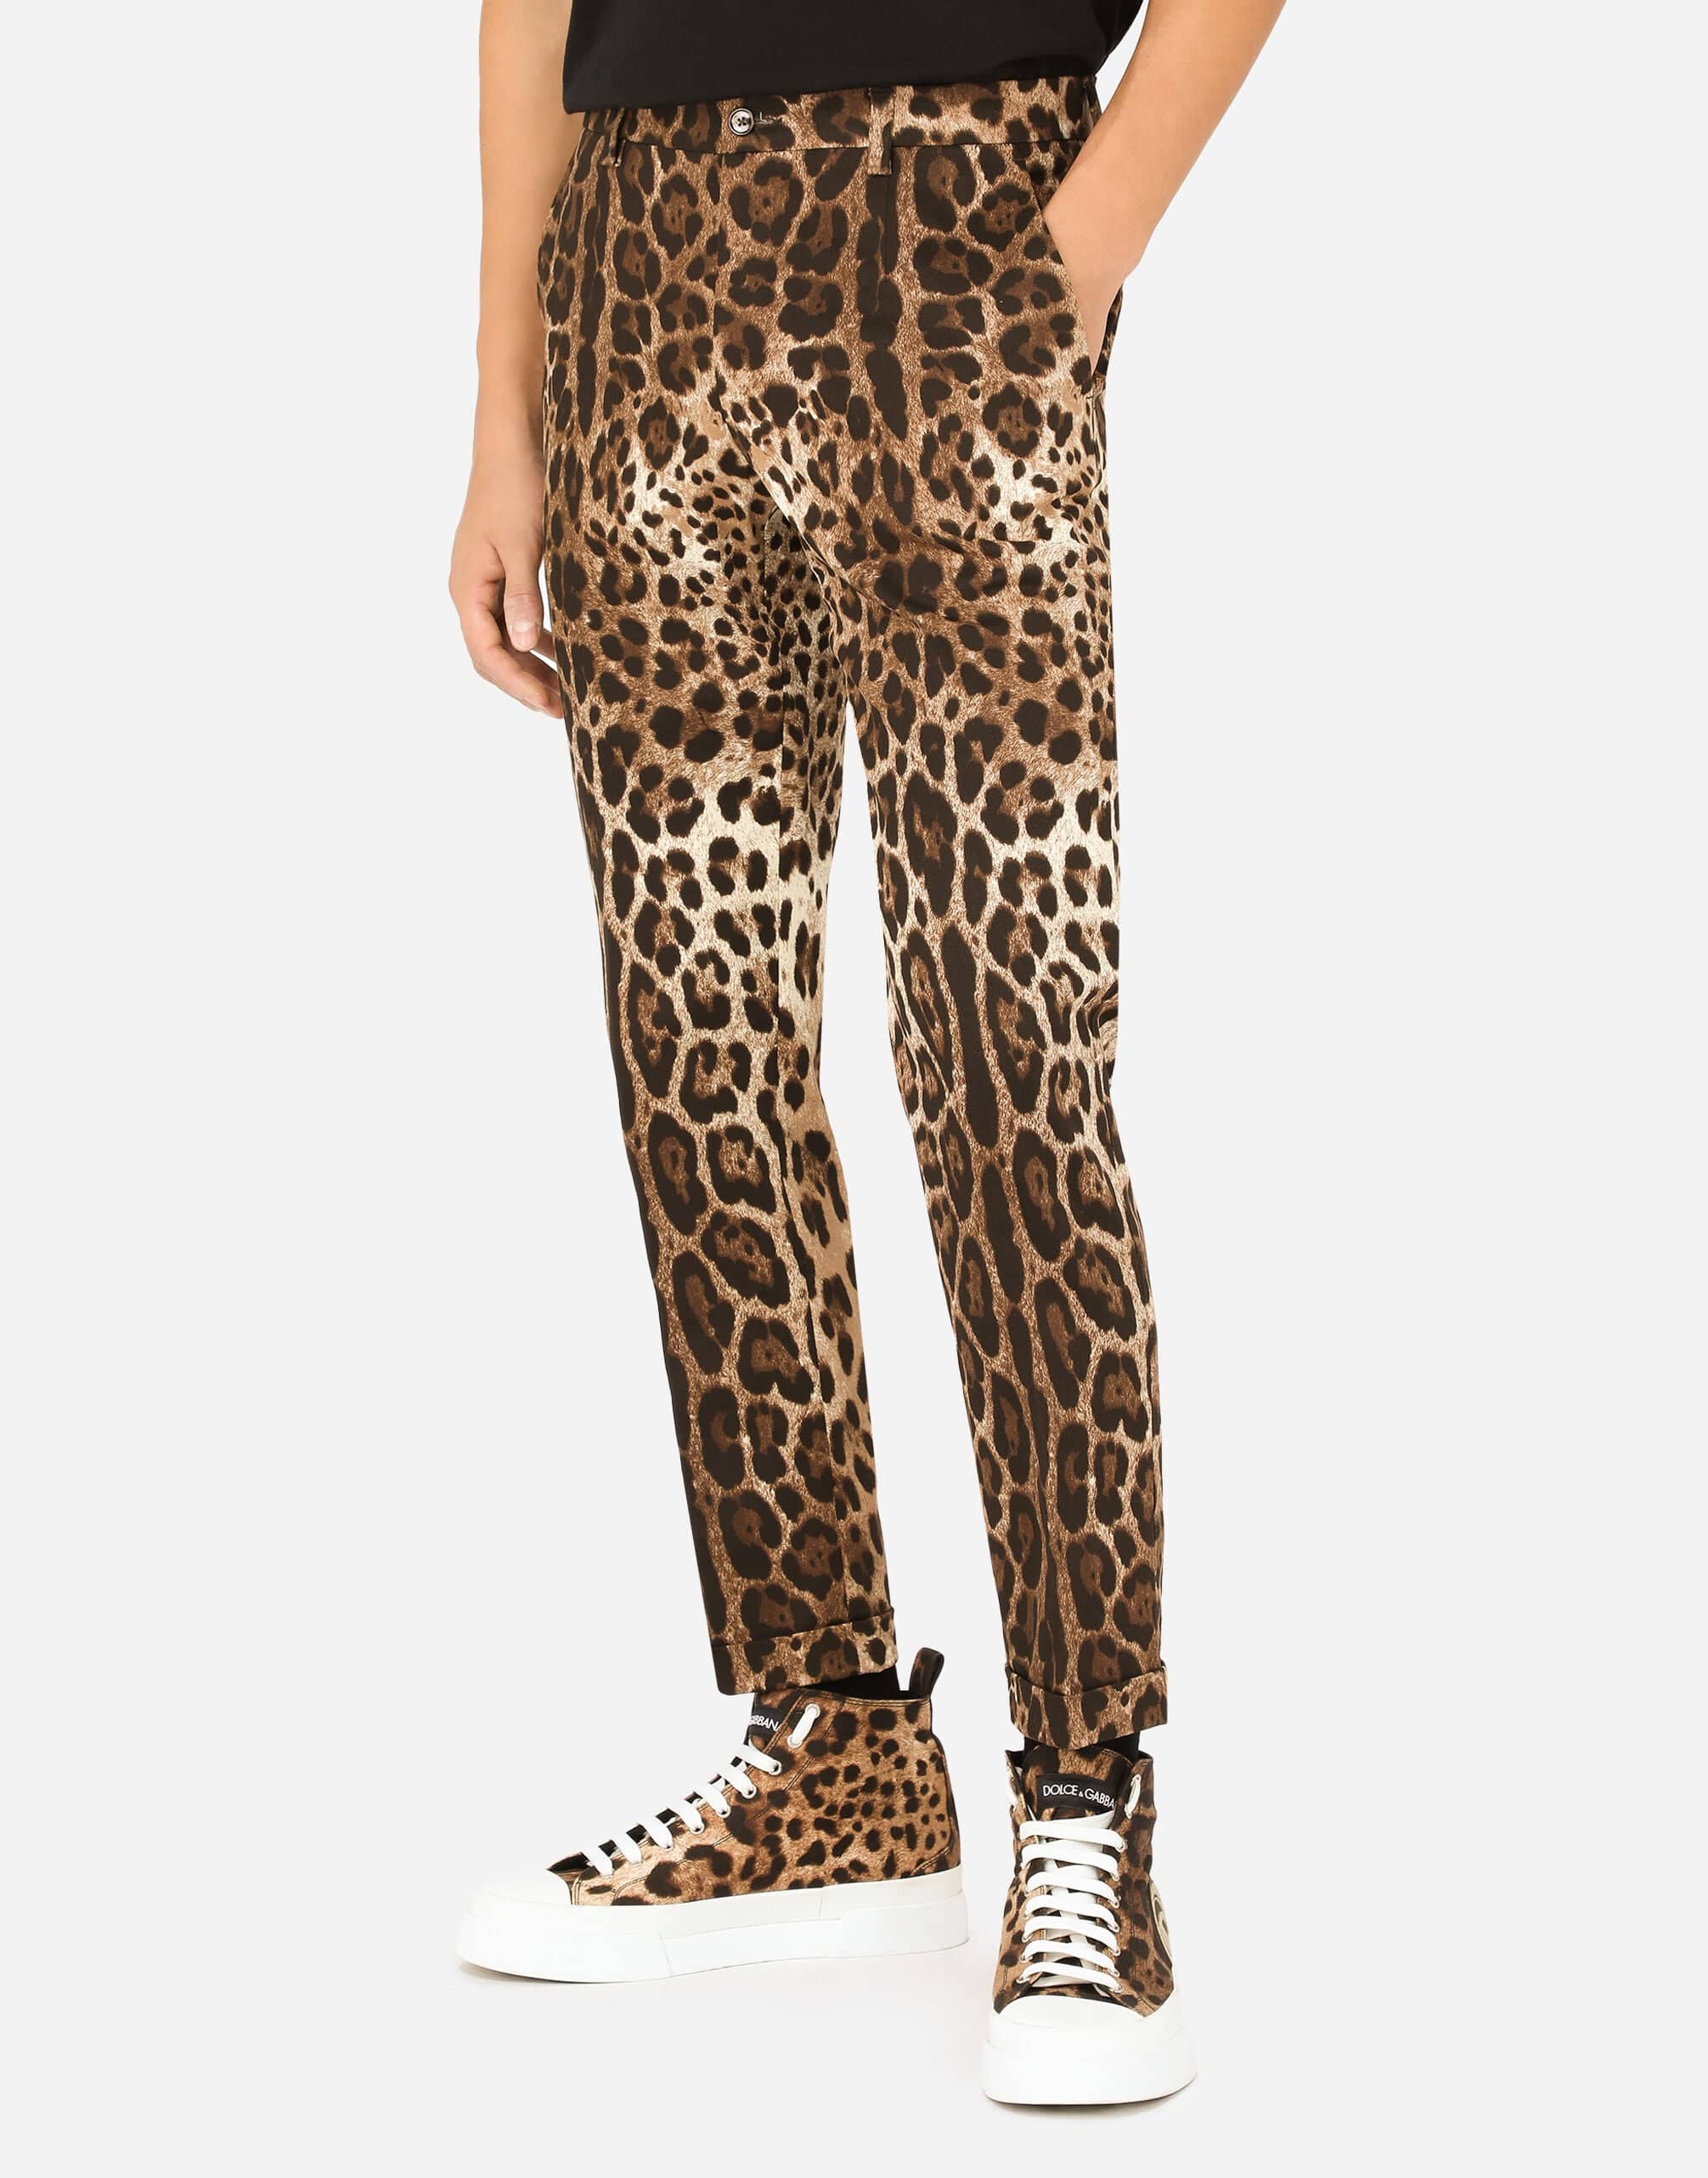 Dolce & Gabbana Leopard Printed Cotton Pants